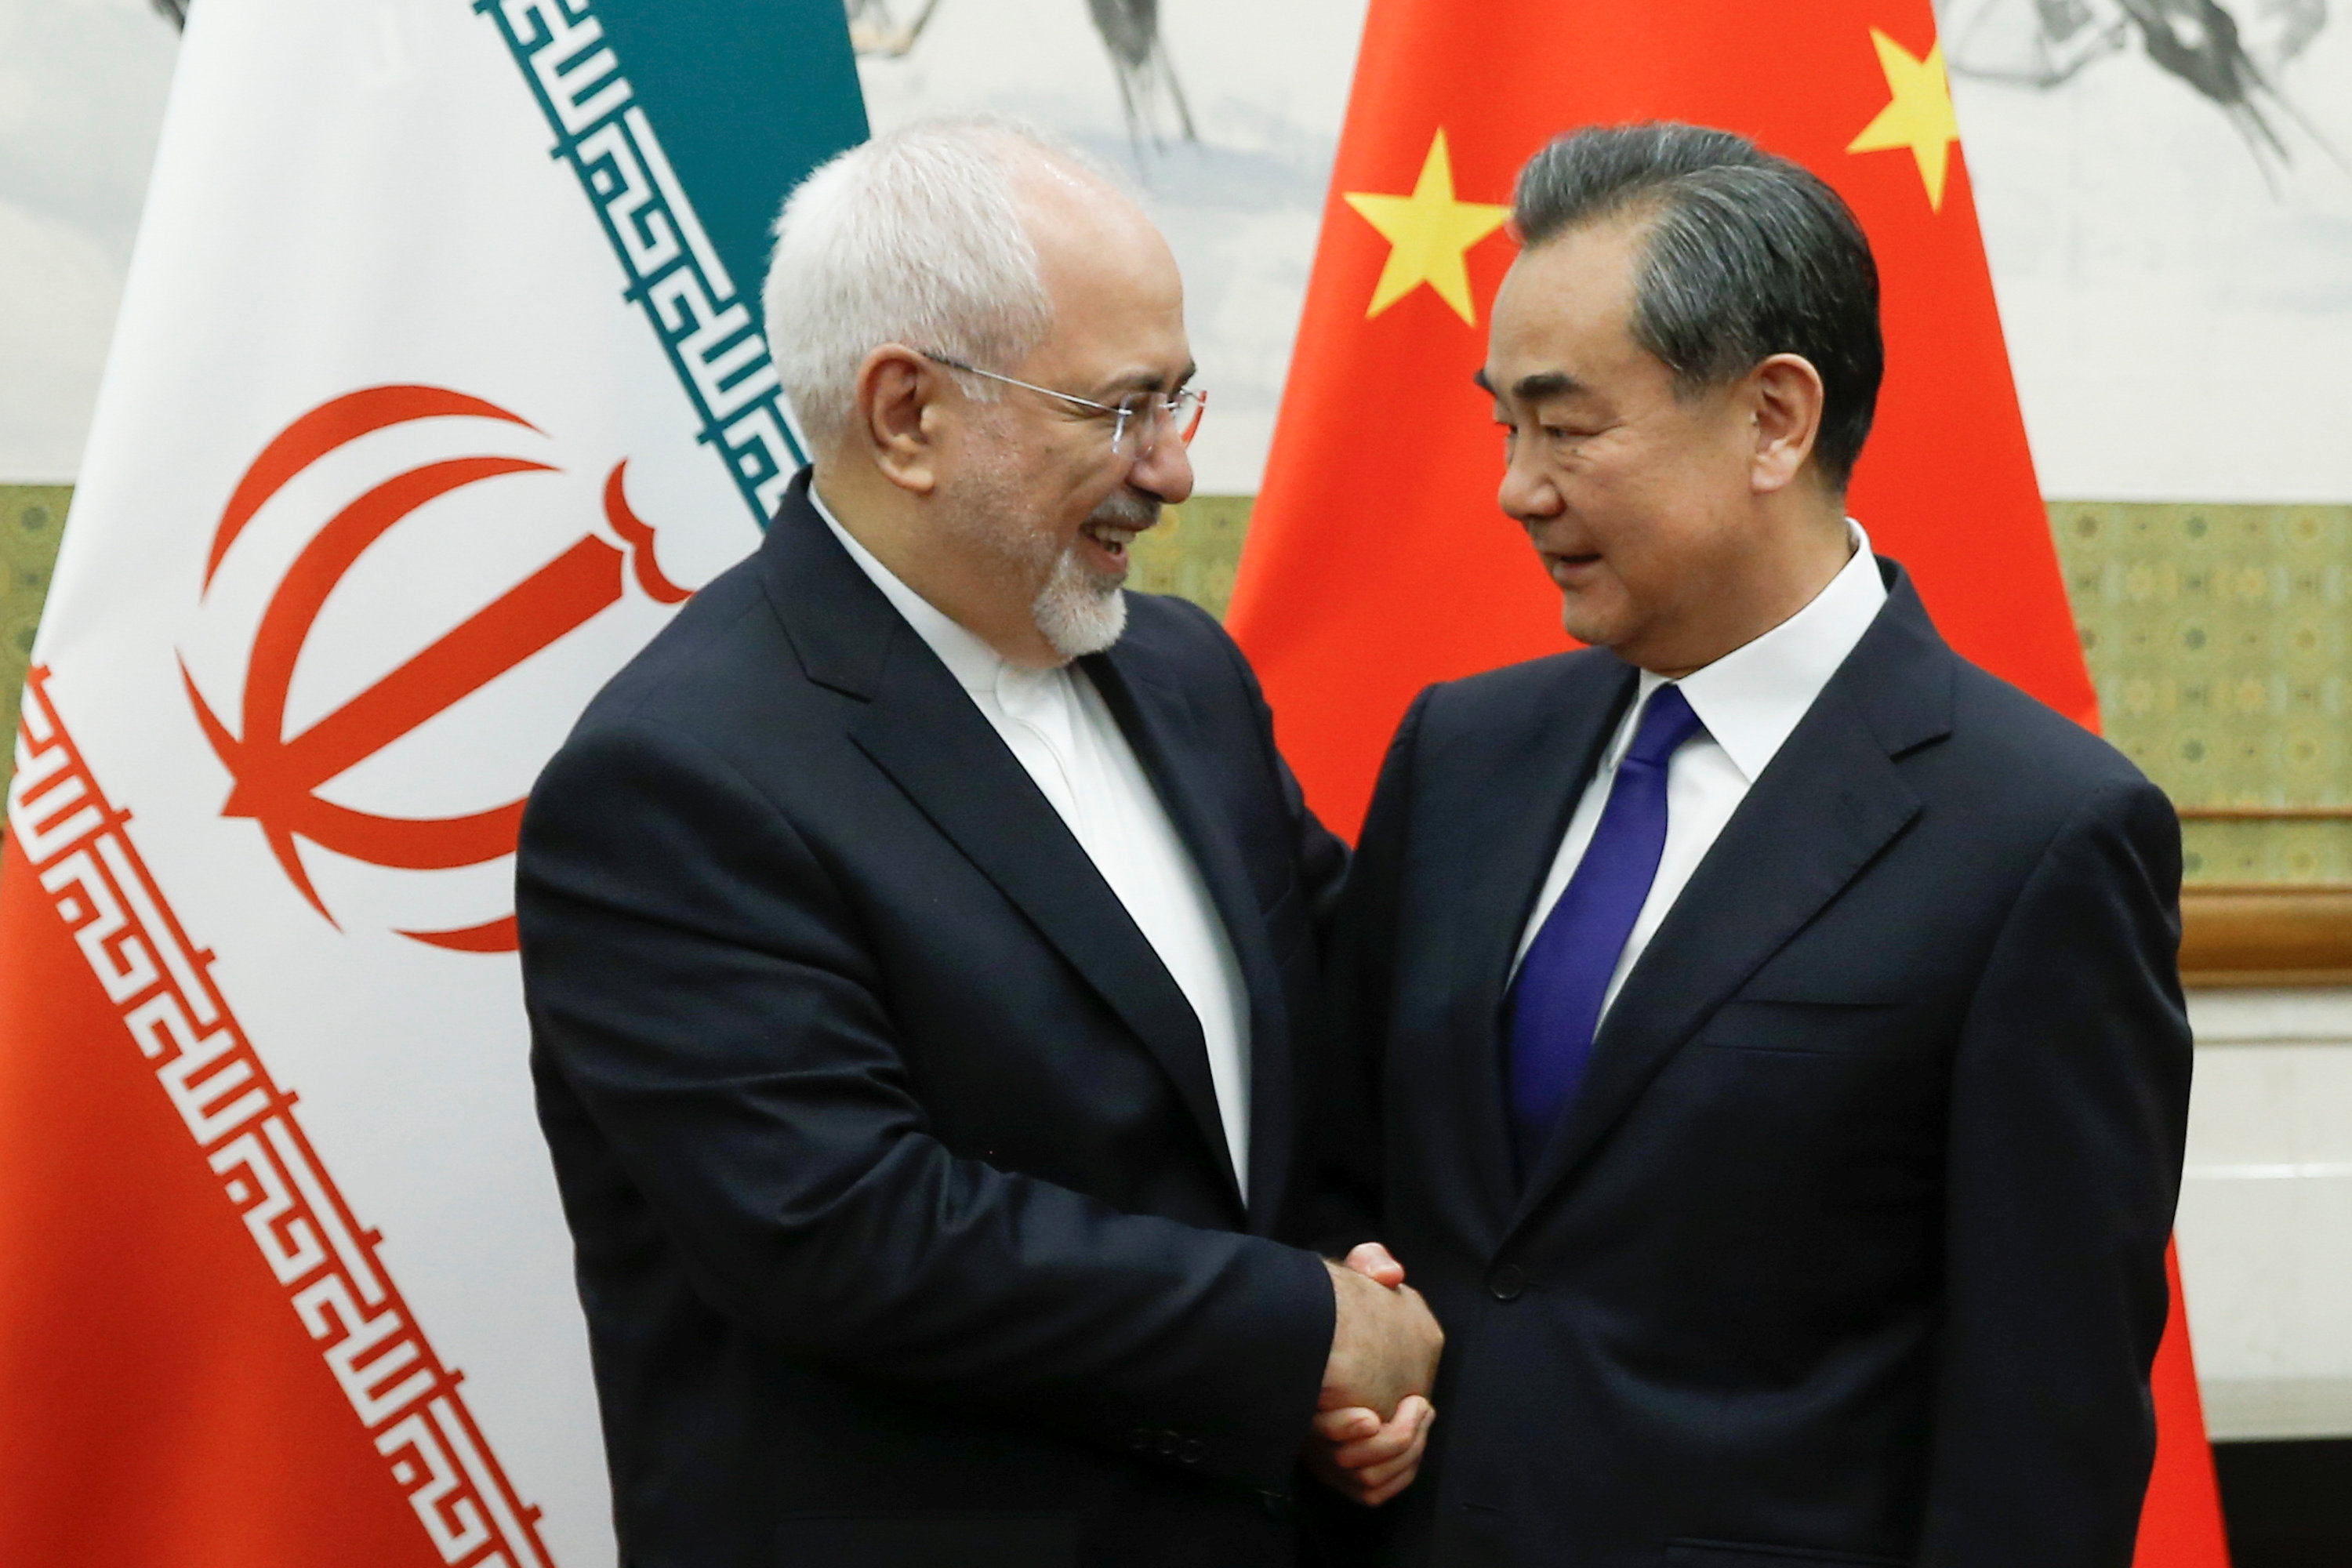 iran-china-strategic-partnership-wider-than-economy-say-officials